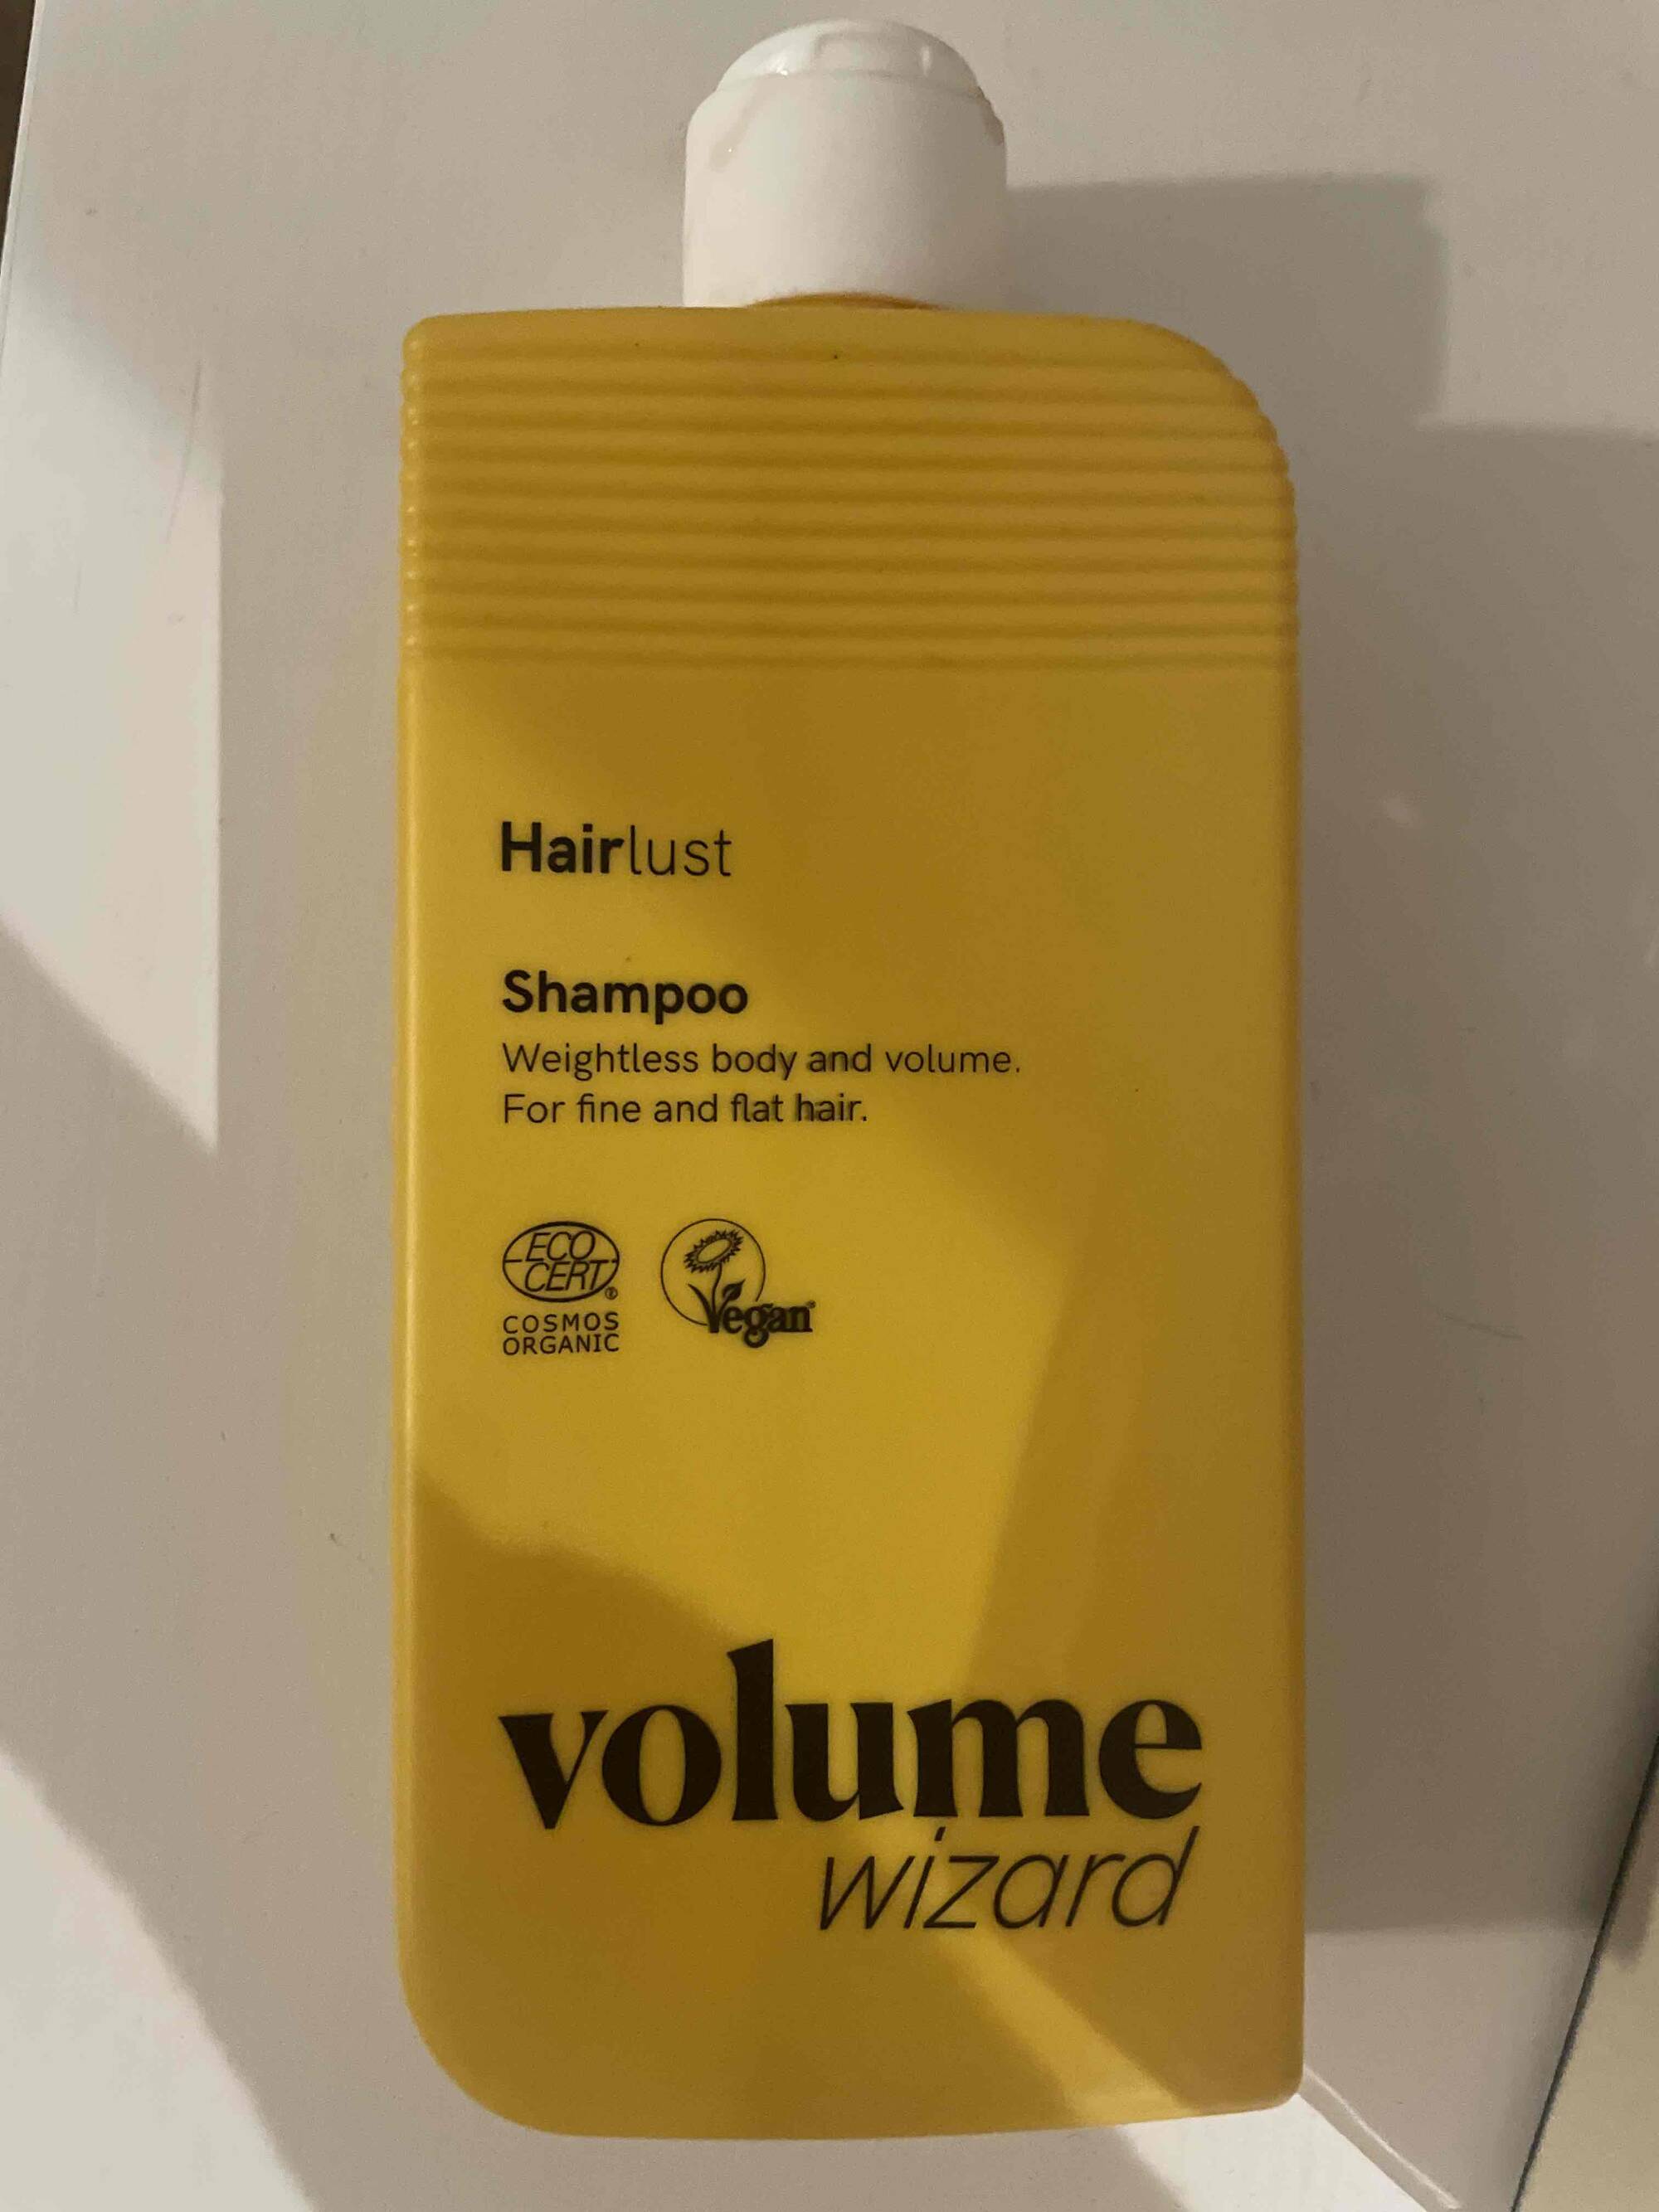 HAIRLUST - Shampoo volume wizard